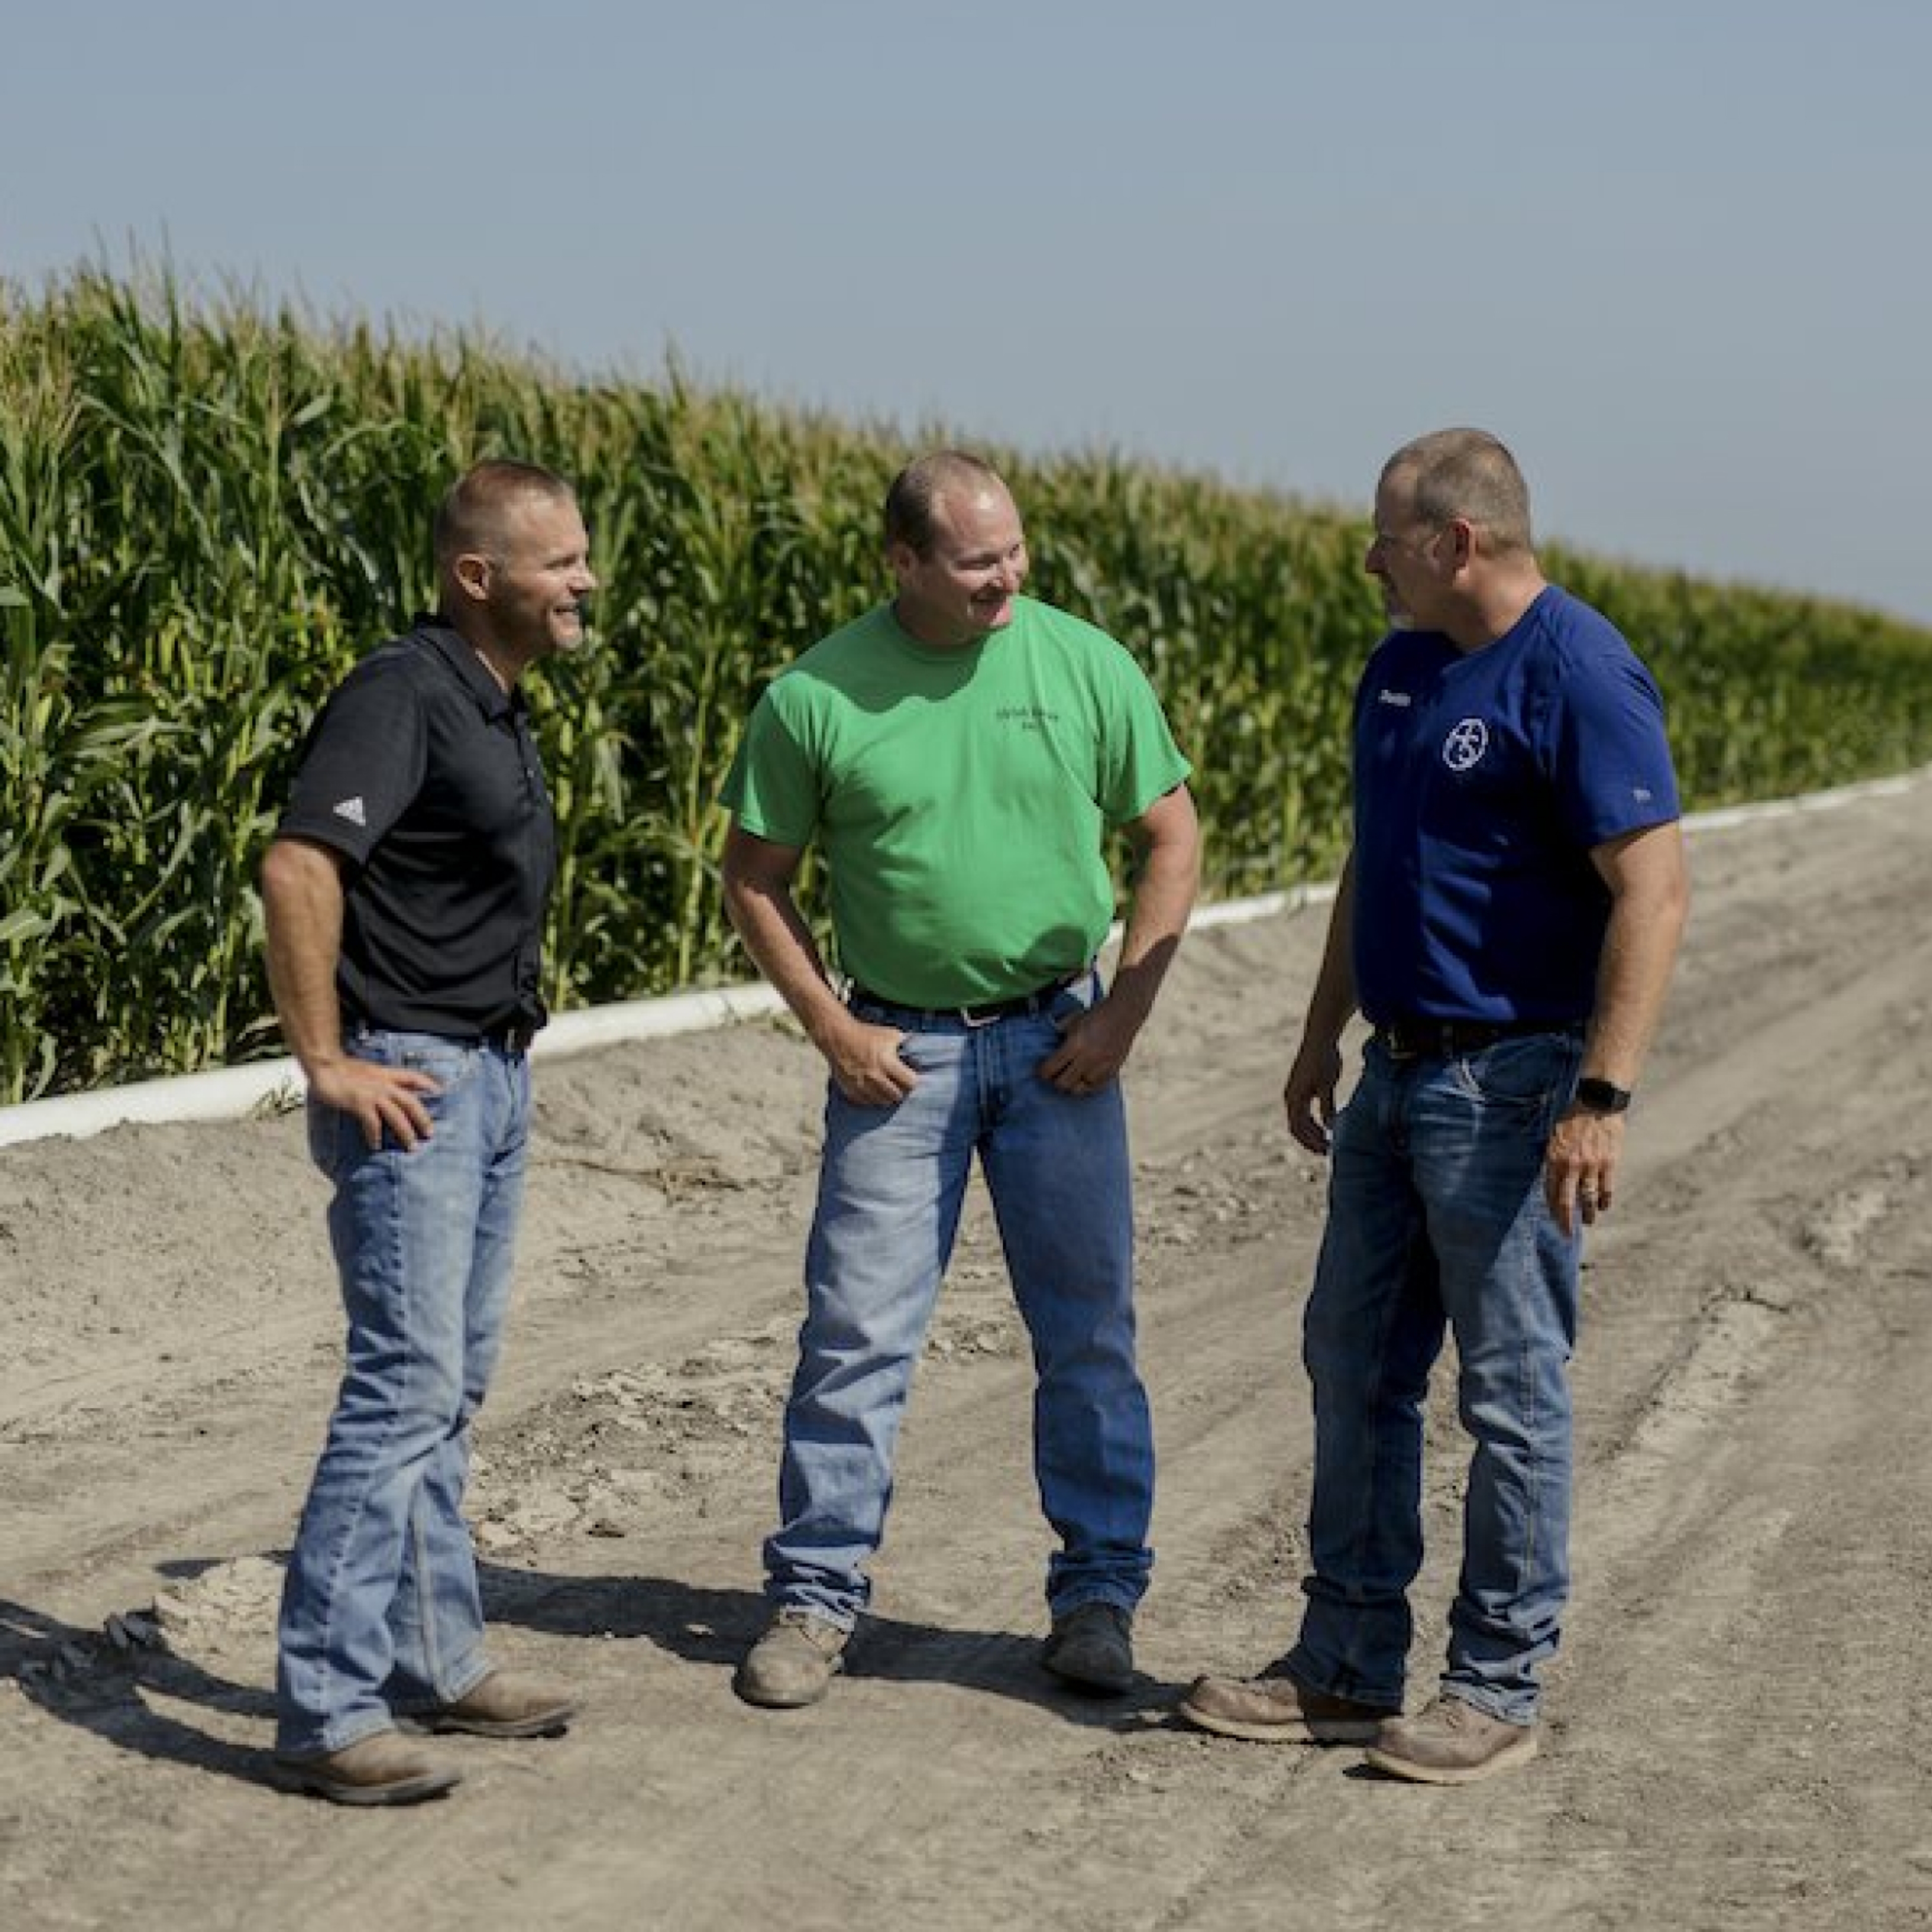 A photo of three farmers talking on a dirt pathway near a cornfield